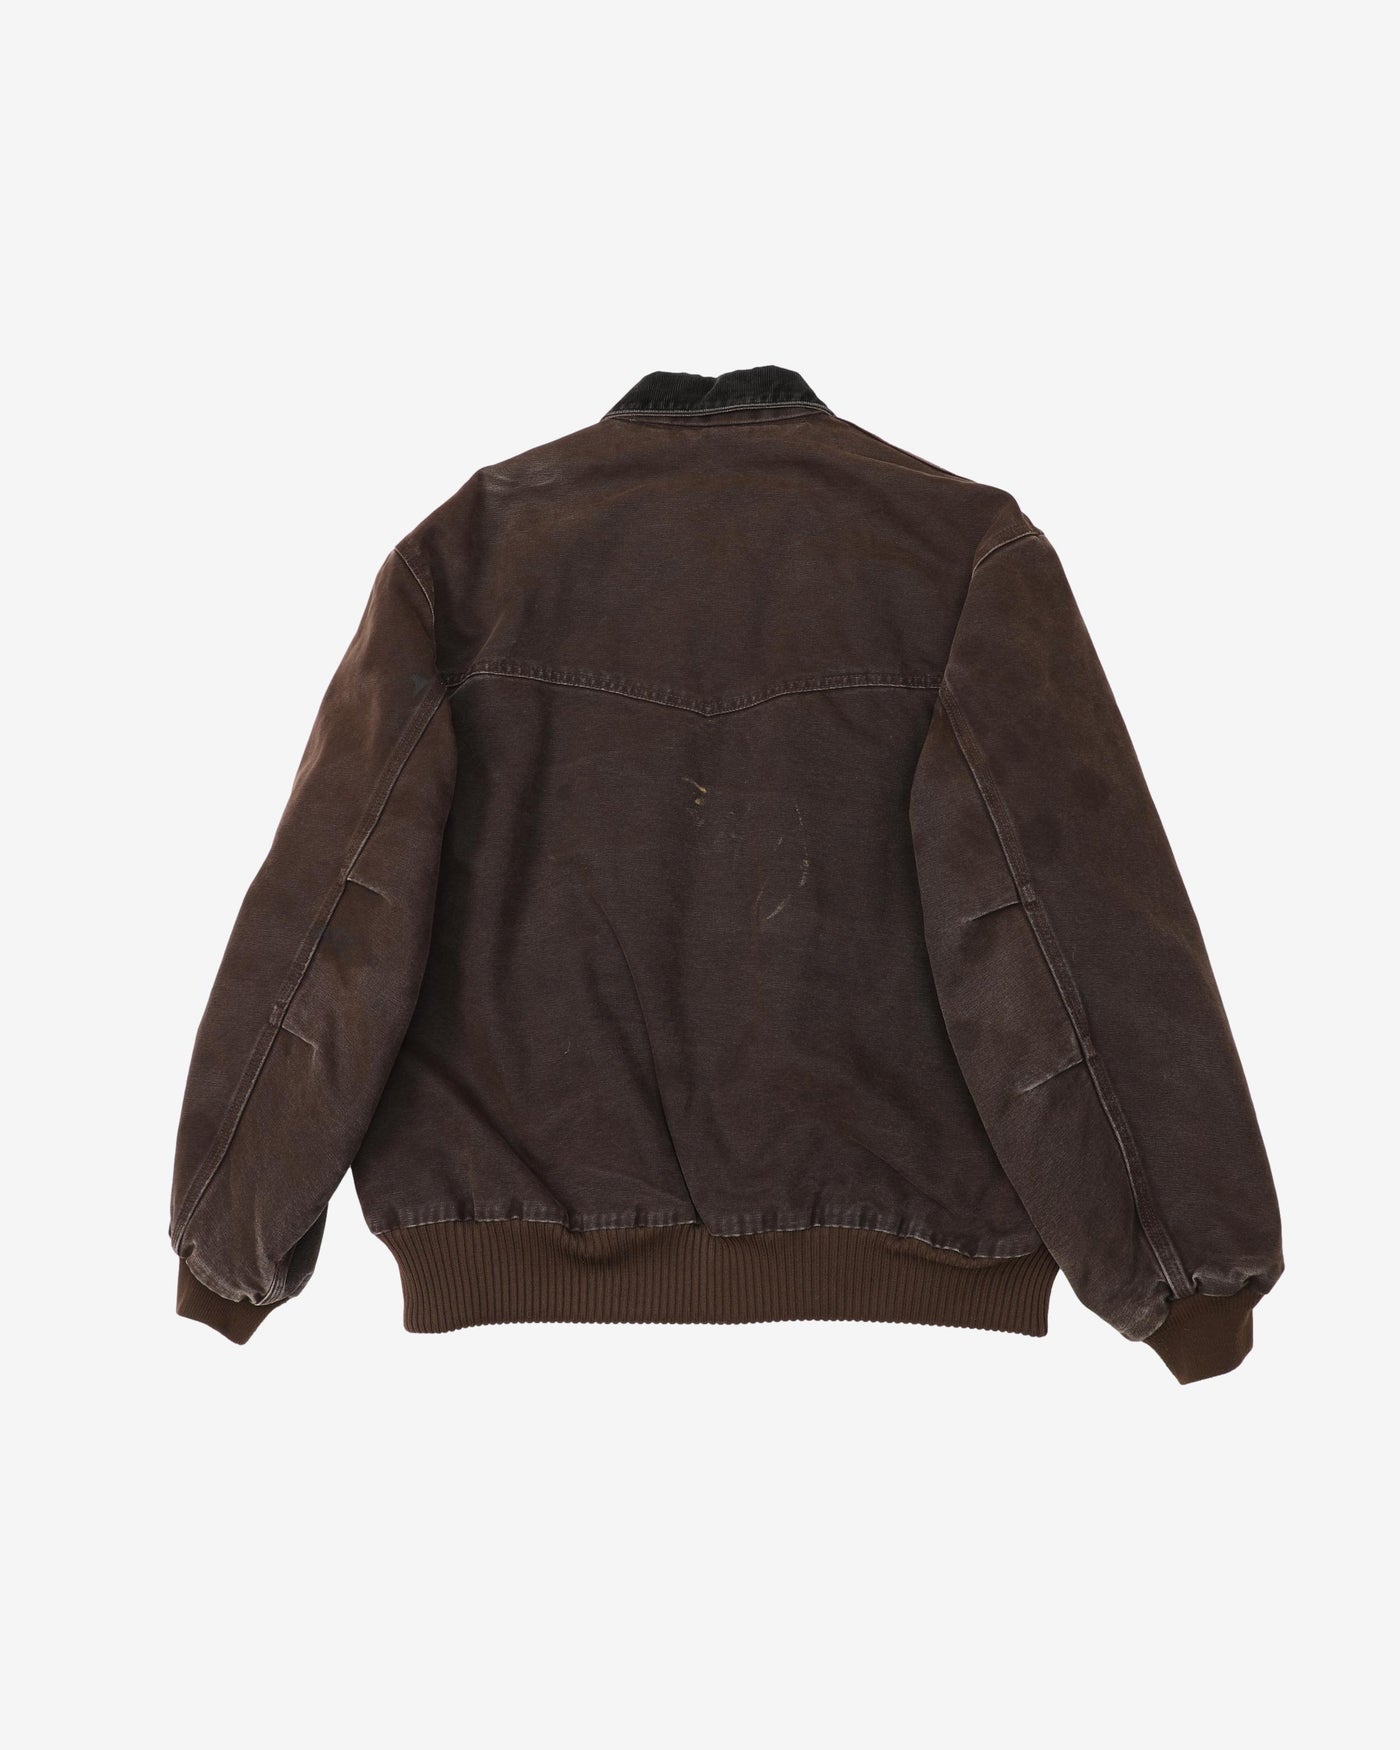 Vintage 90s Brown Carhartt Workwear / Utility Jacket - XL